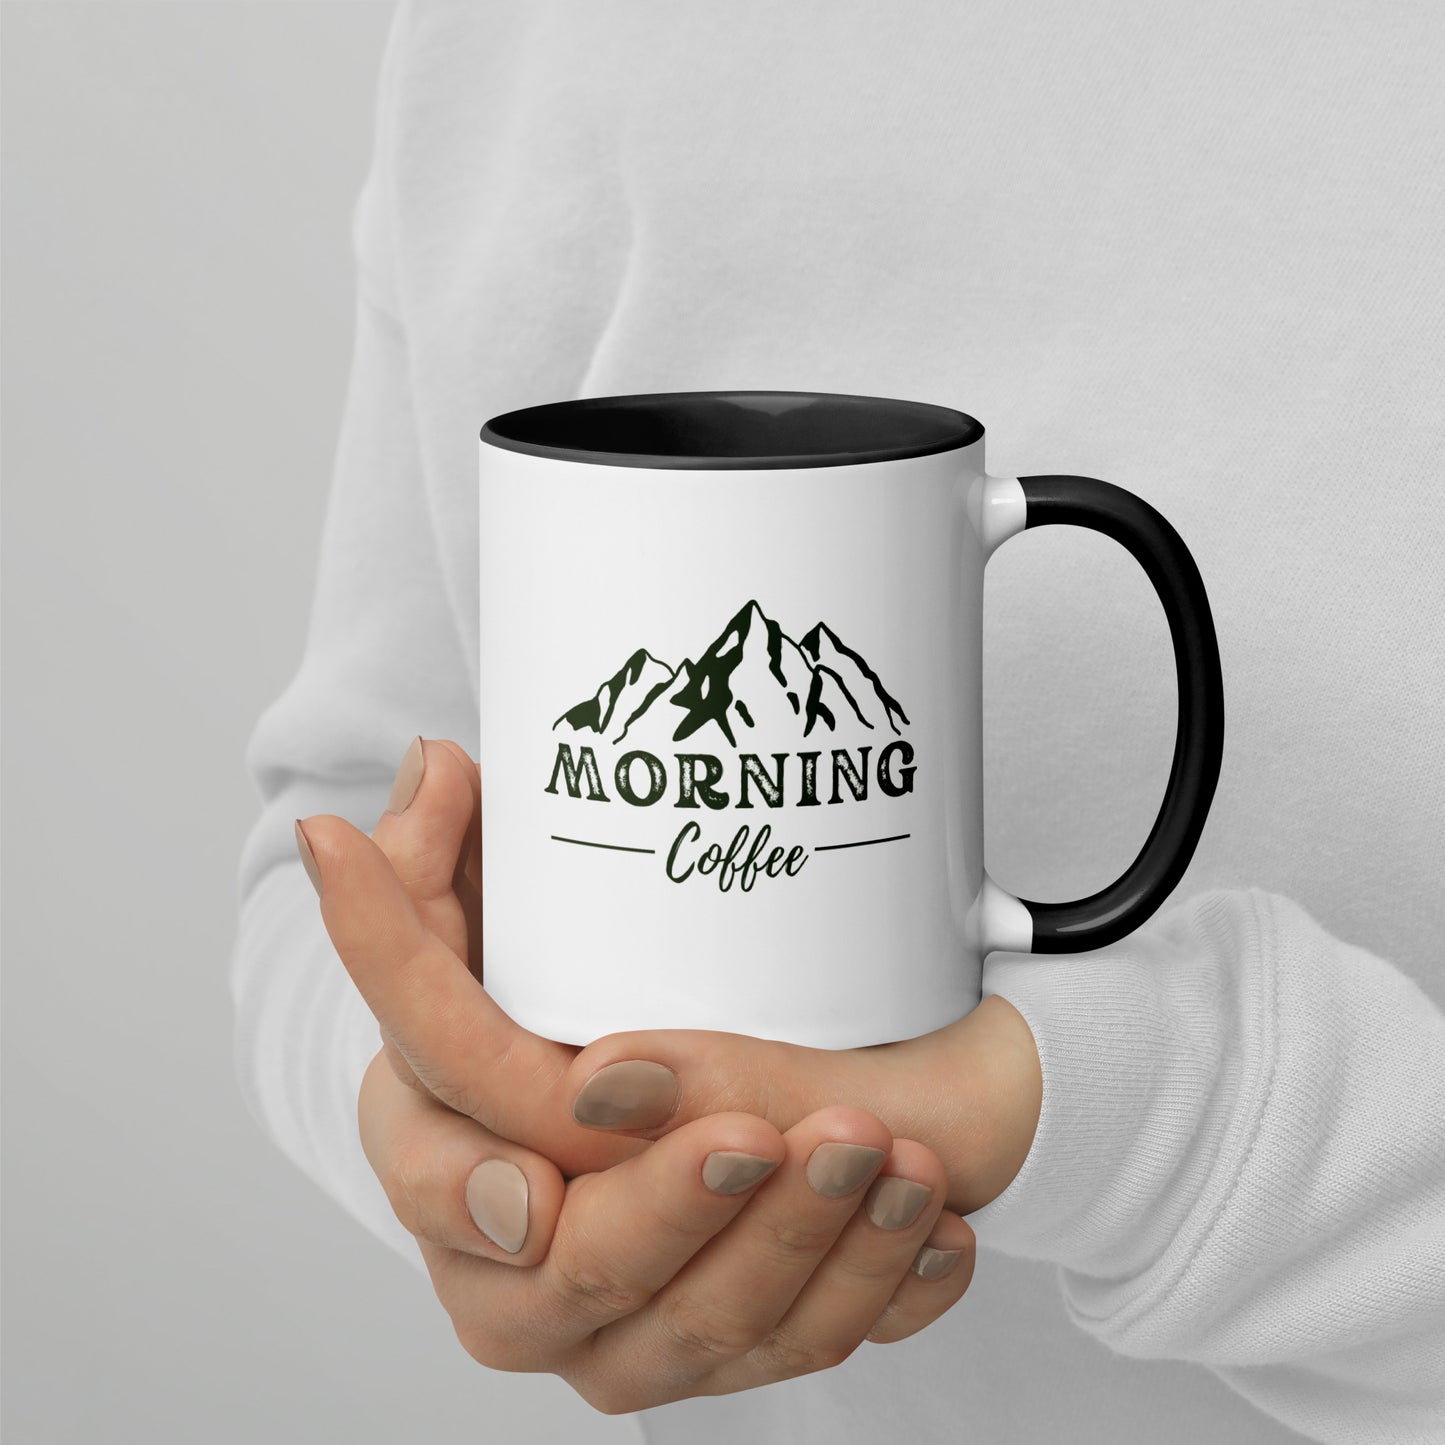 " Morning Coffee" Mug